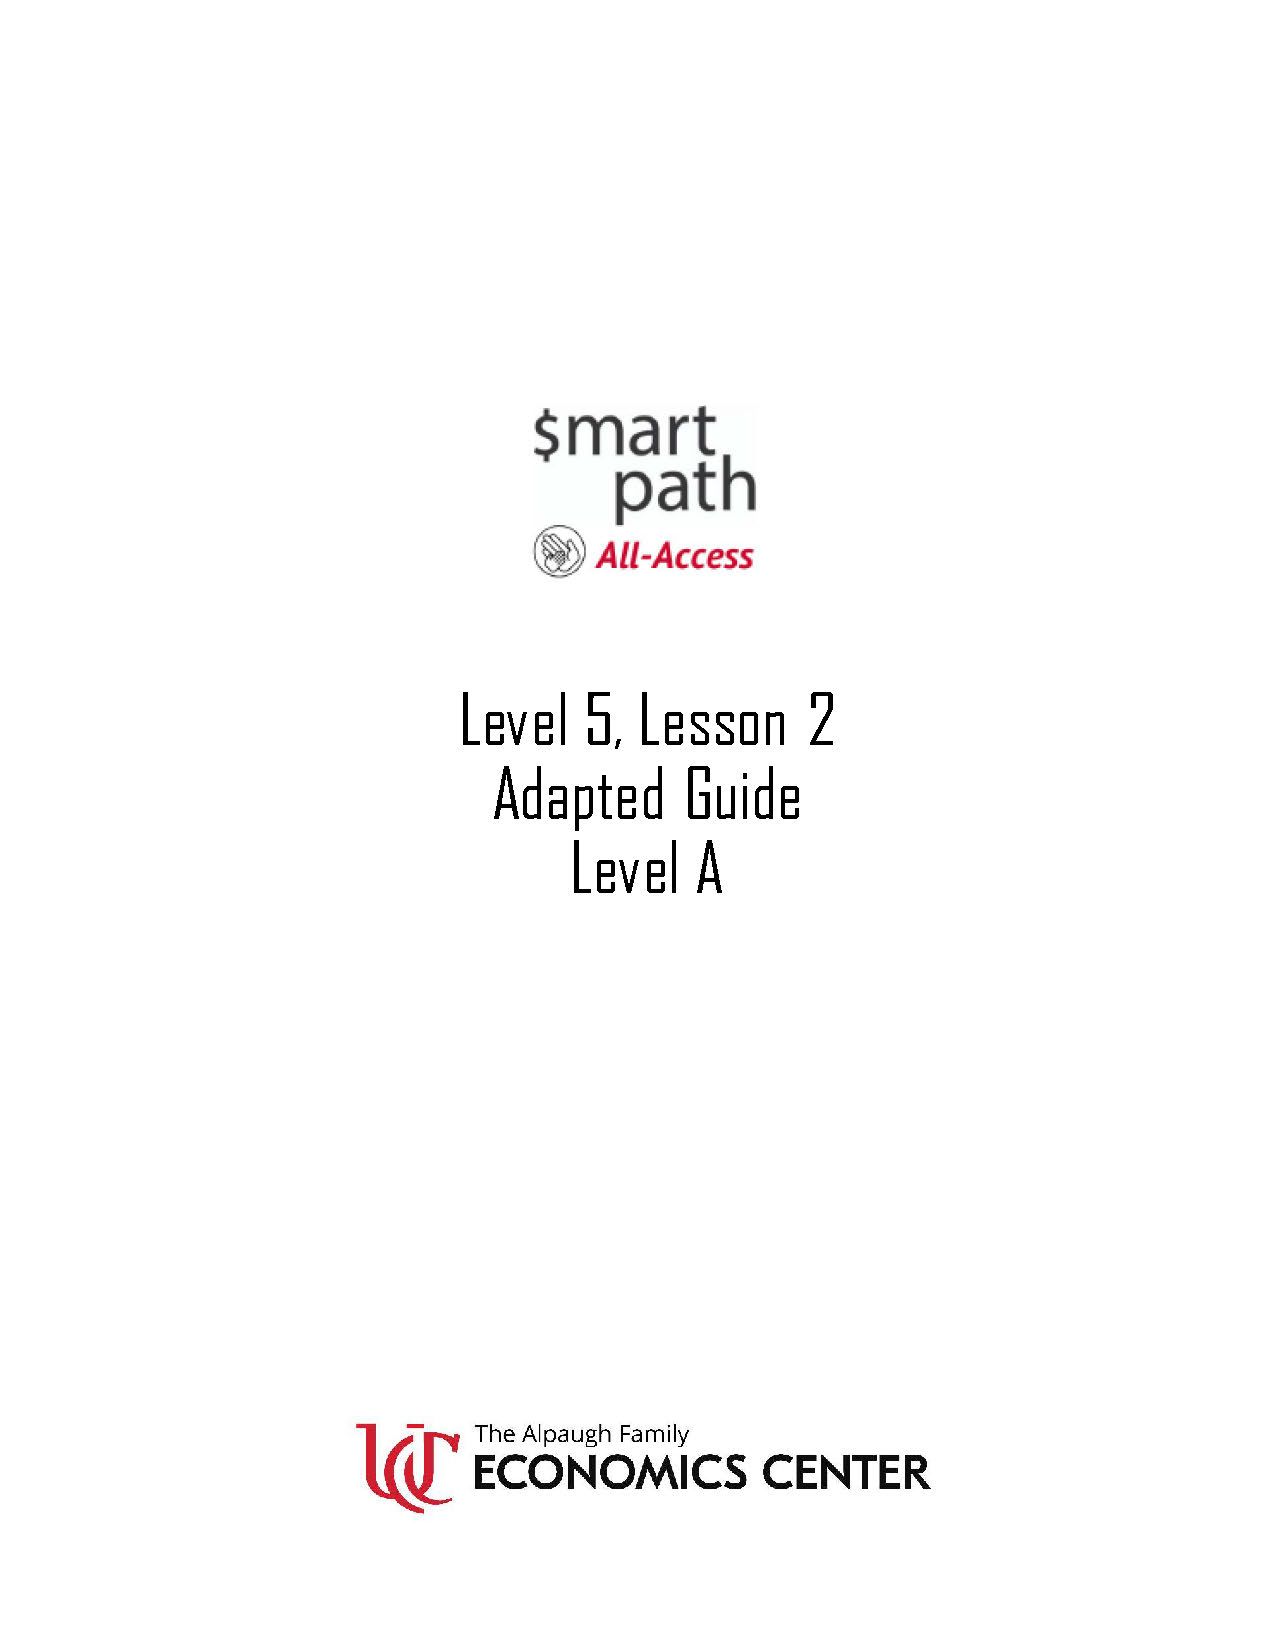 Level 5 lesson 2 cover